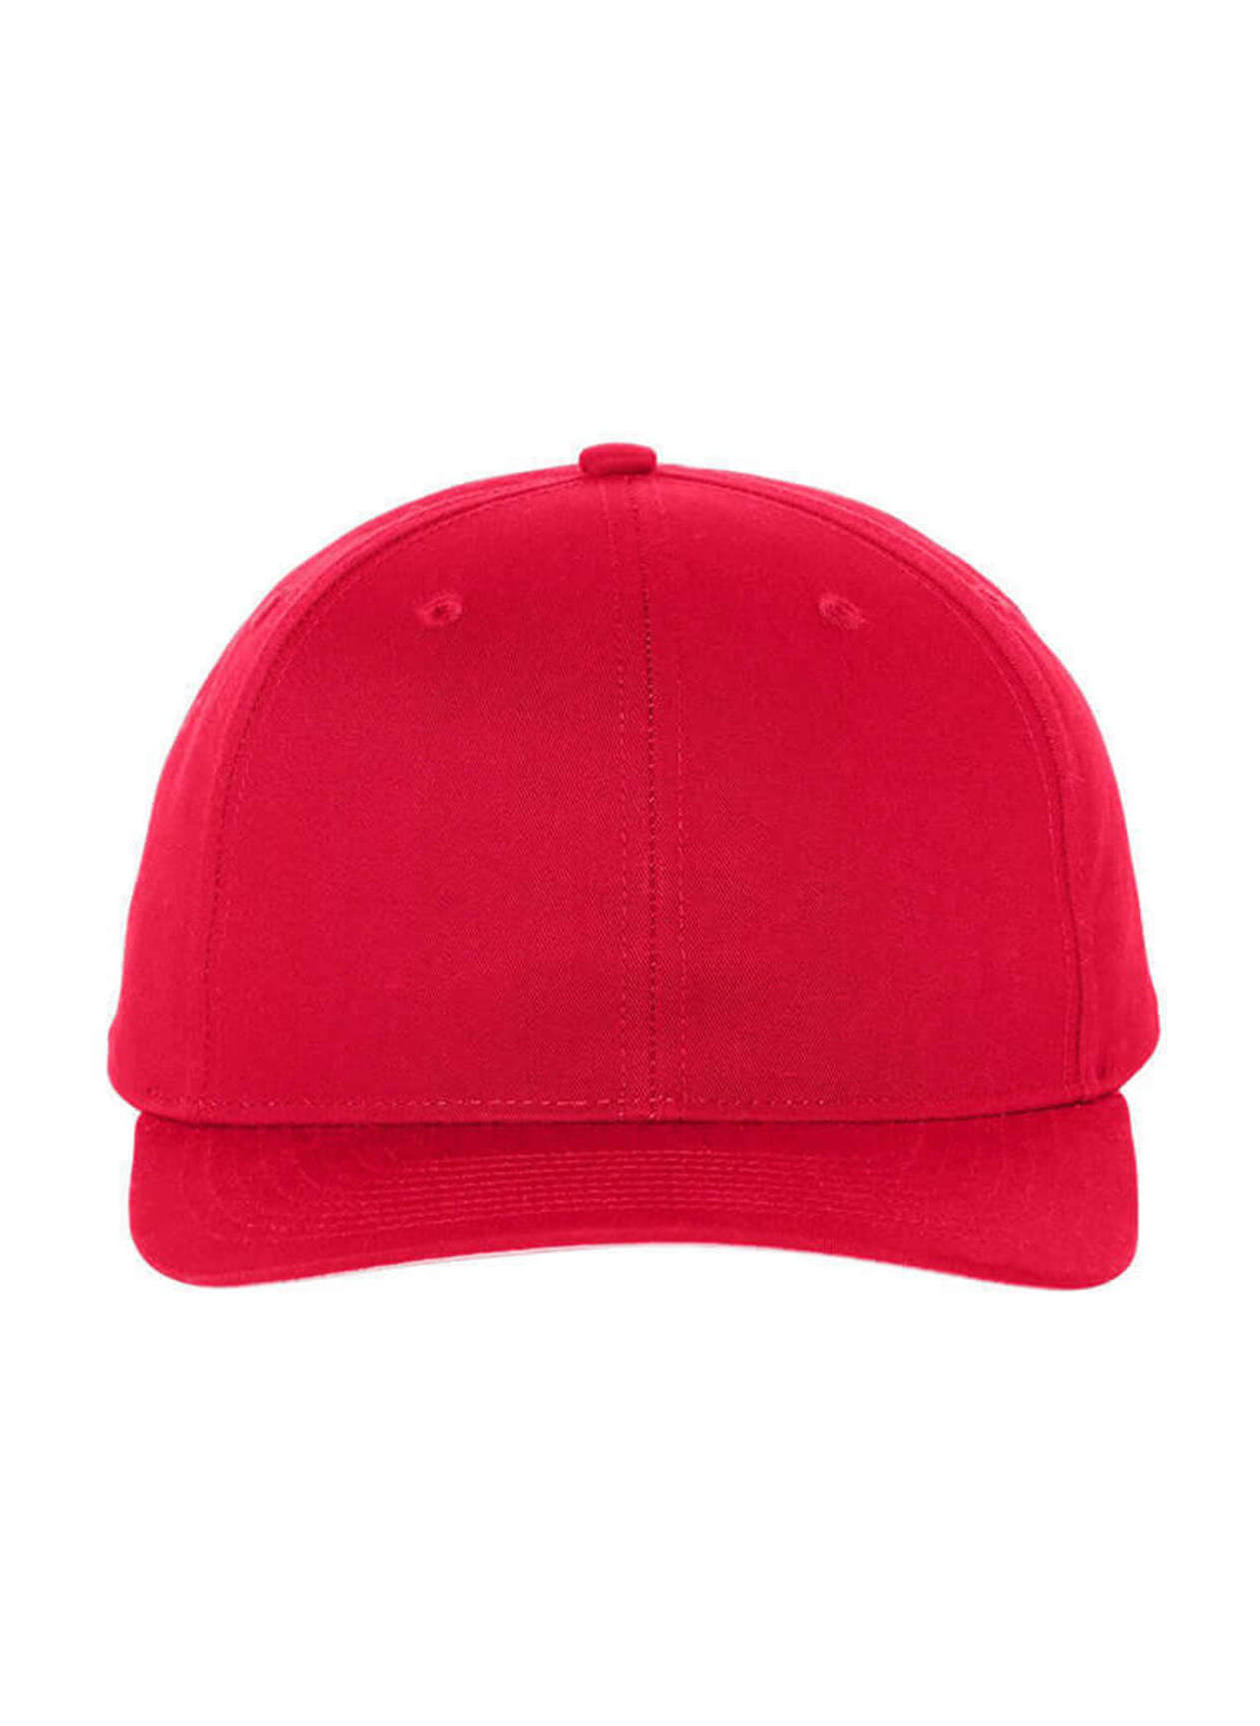 Richardson Red Pro Twill Snapback Hat